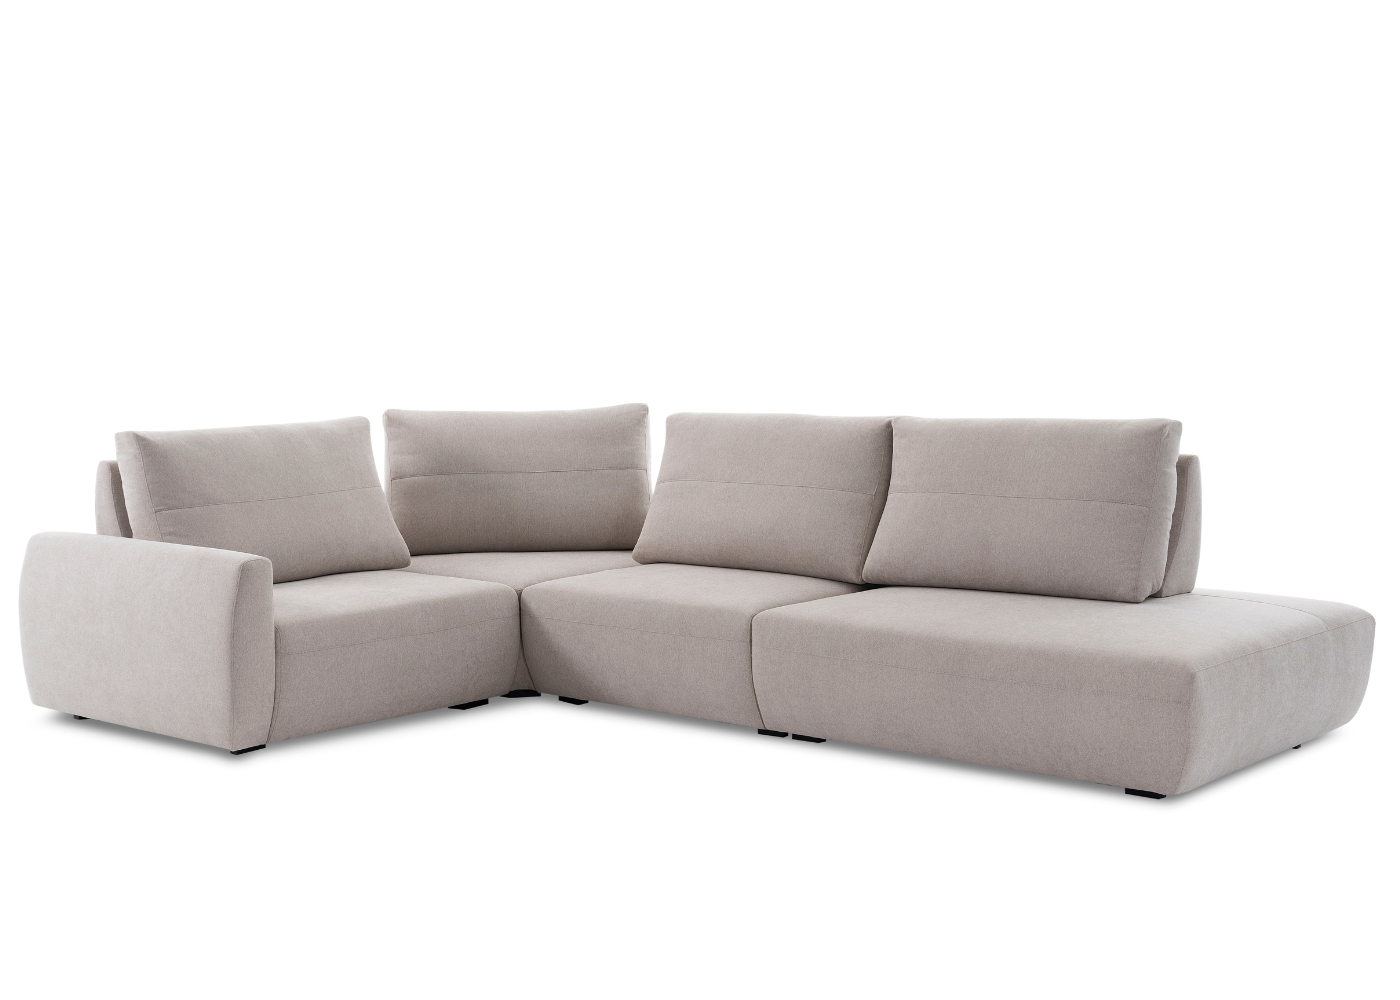 Sofá Carino design moderno e inteligente para máximo conforto.